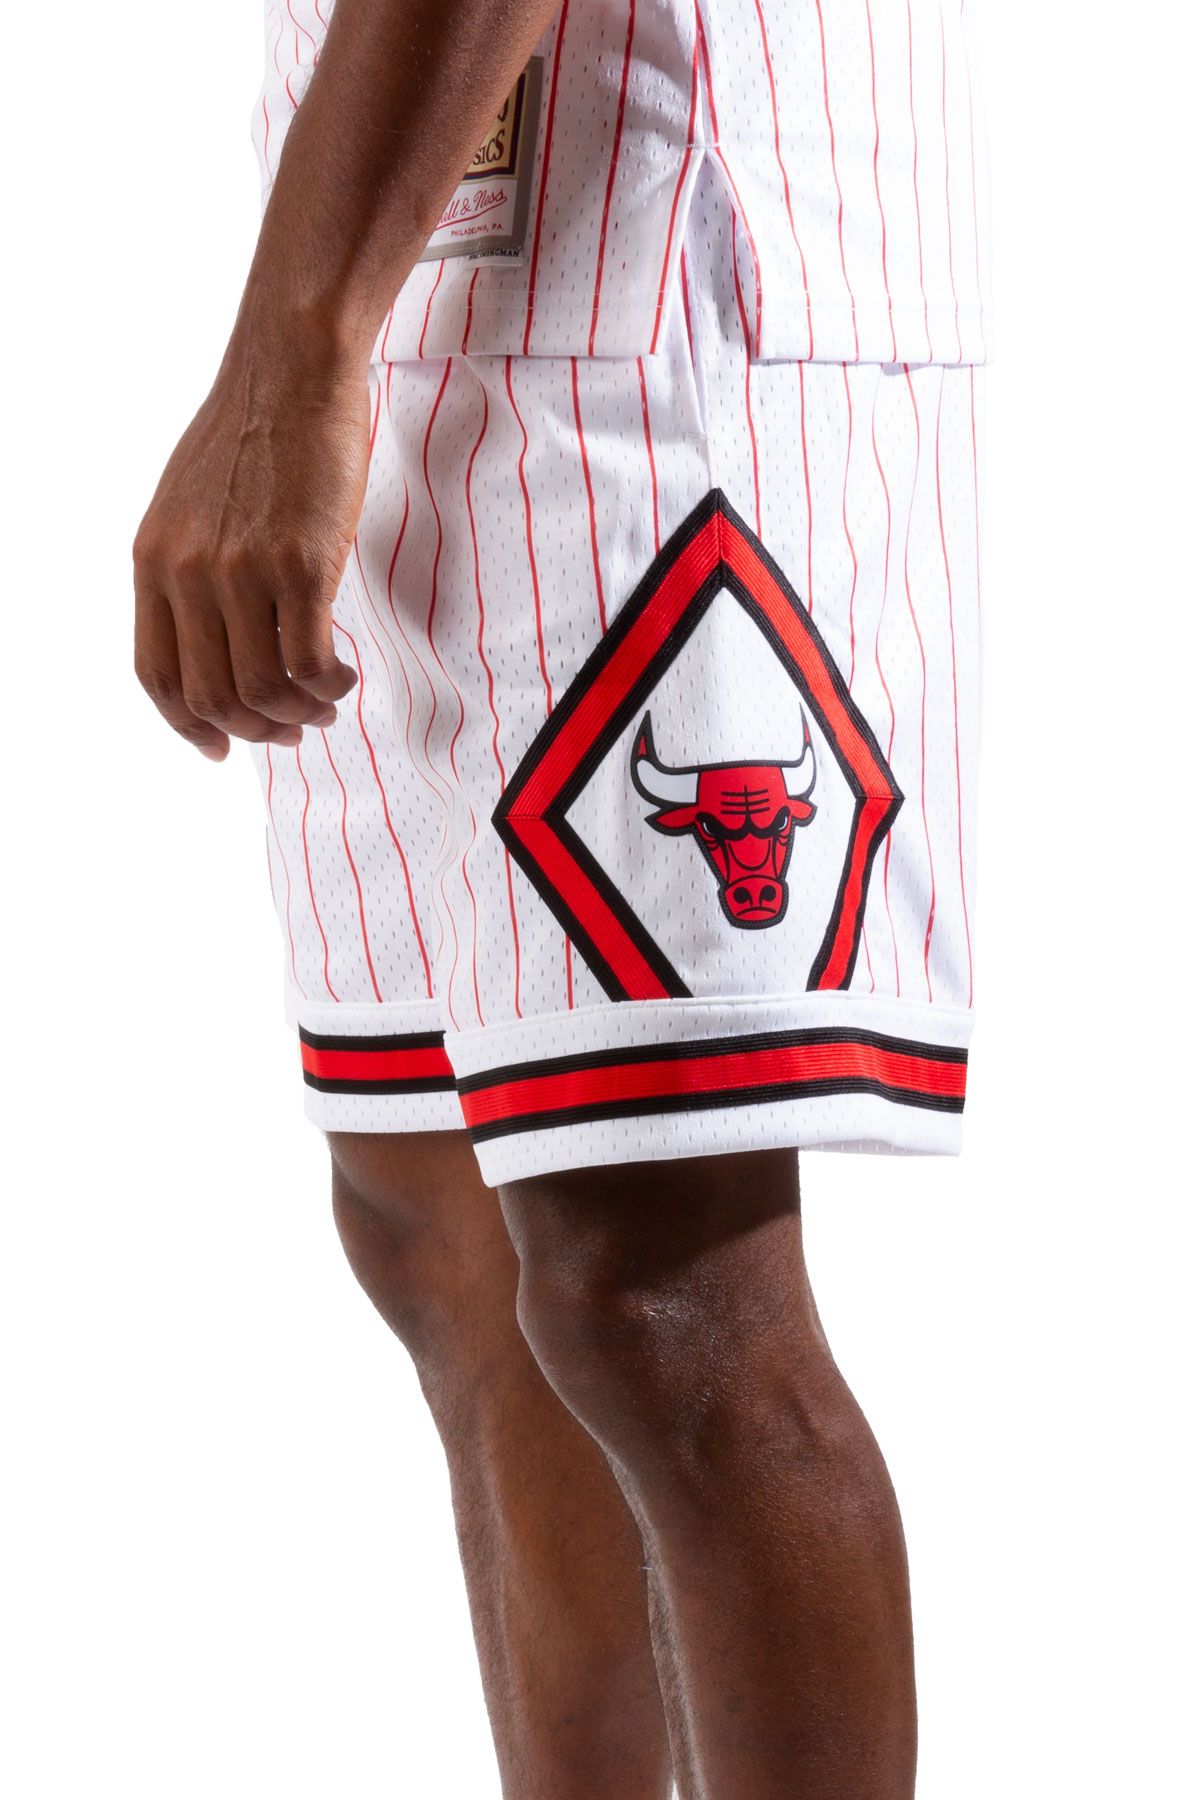 Mitchell & Ness Chicago Bulls Swingman Shorts Black PIN STRIPE